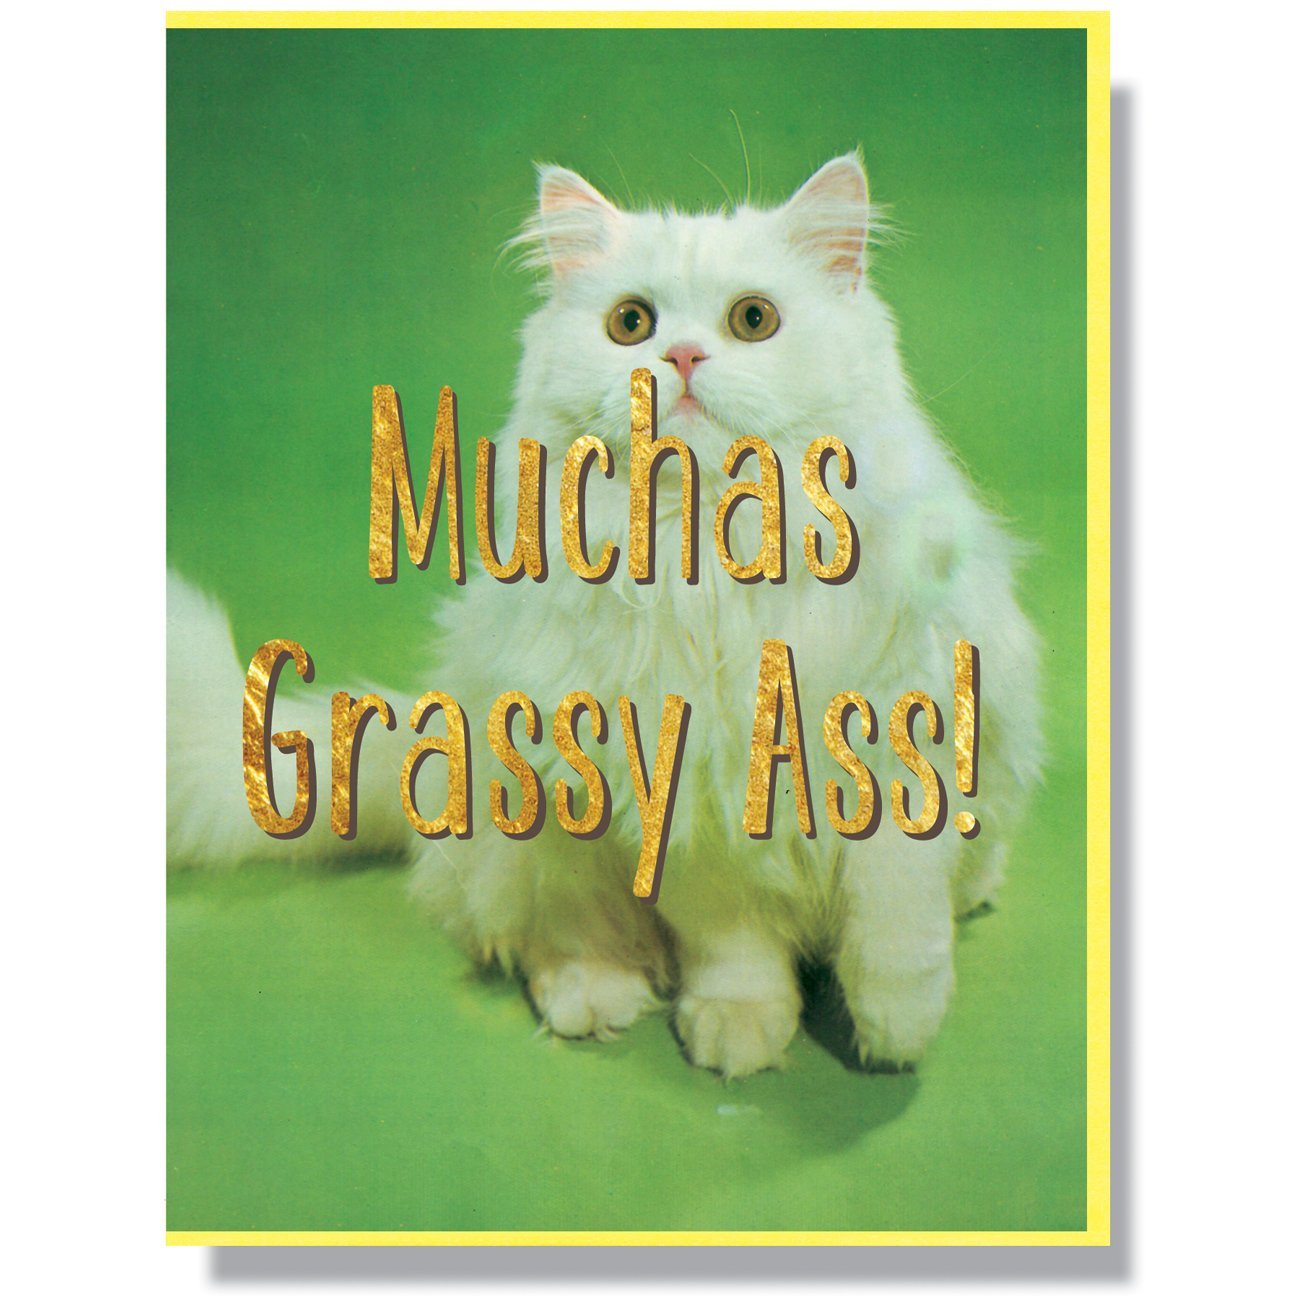 Muchas Grassy Ass!  - Greeting Card